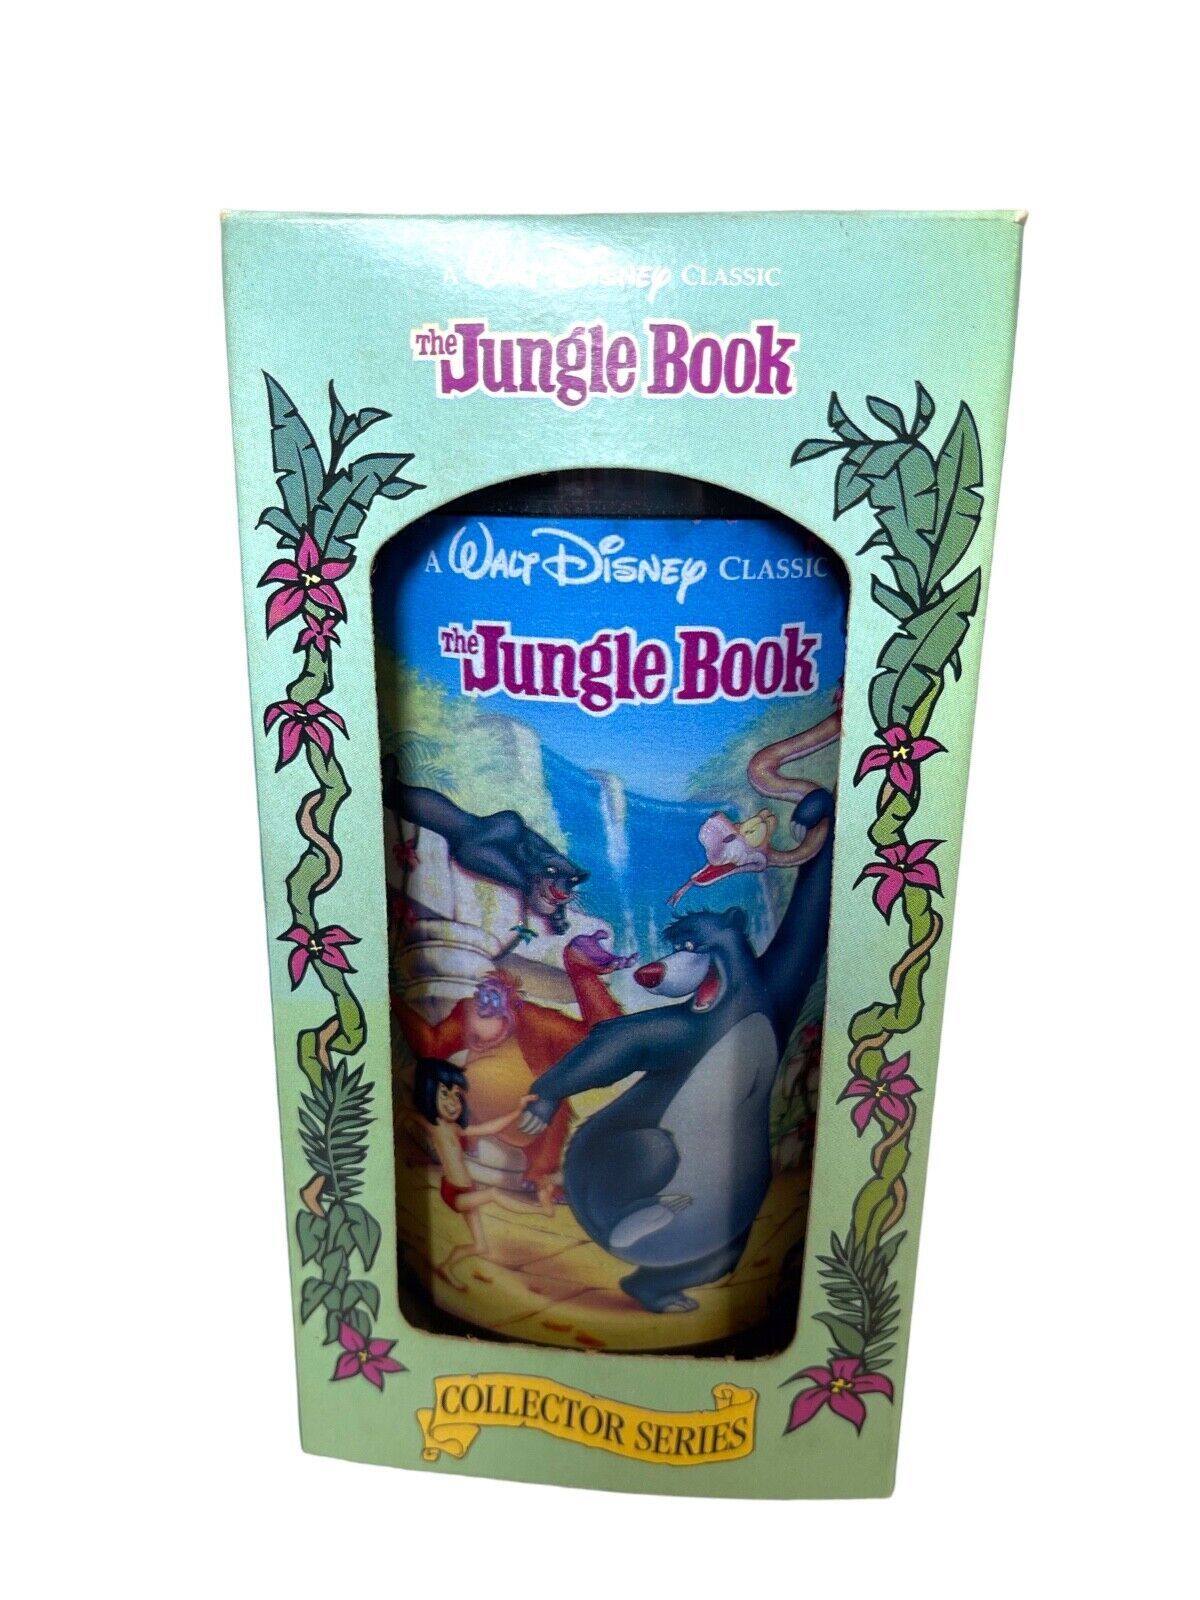 Disney ClassicCollector Series Jungle Book 1994 Vintage Burger King/CocaCola NIB - $10.99